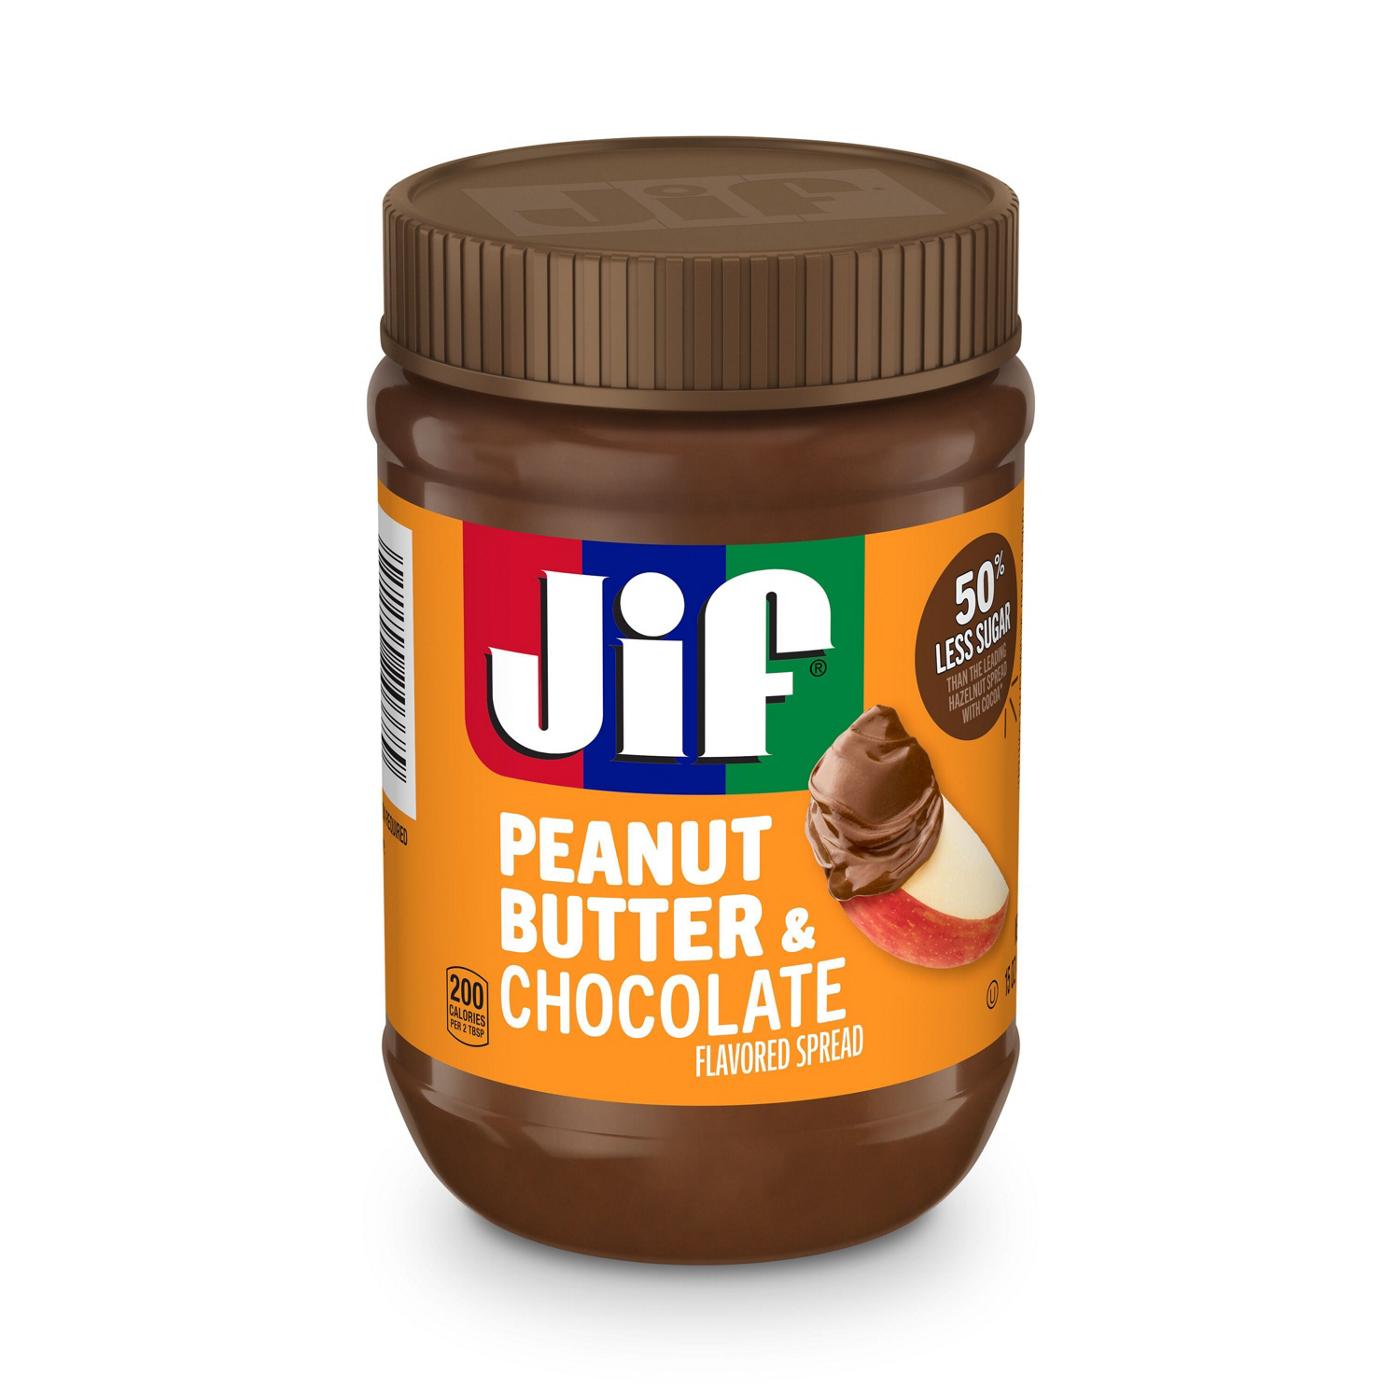 Jif Peanut Butter & Chocolate Spread; image 1 of 2